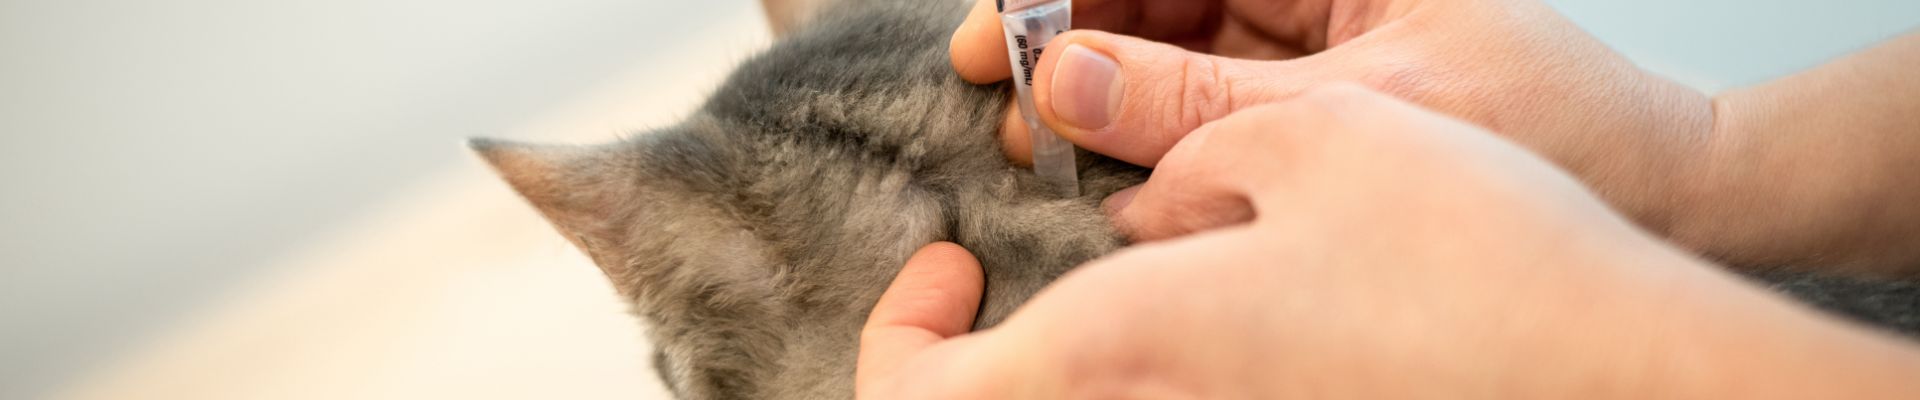 vet gives cat flea treatment banner